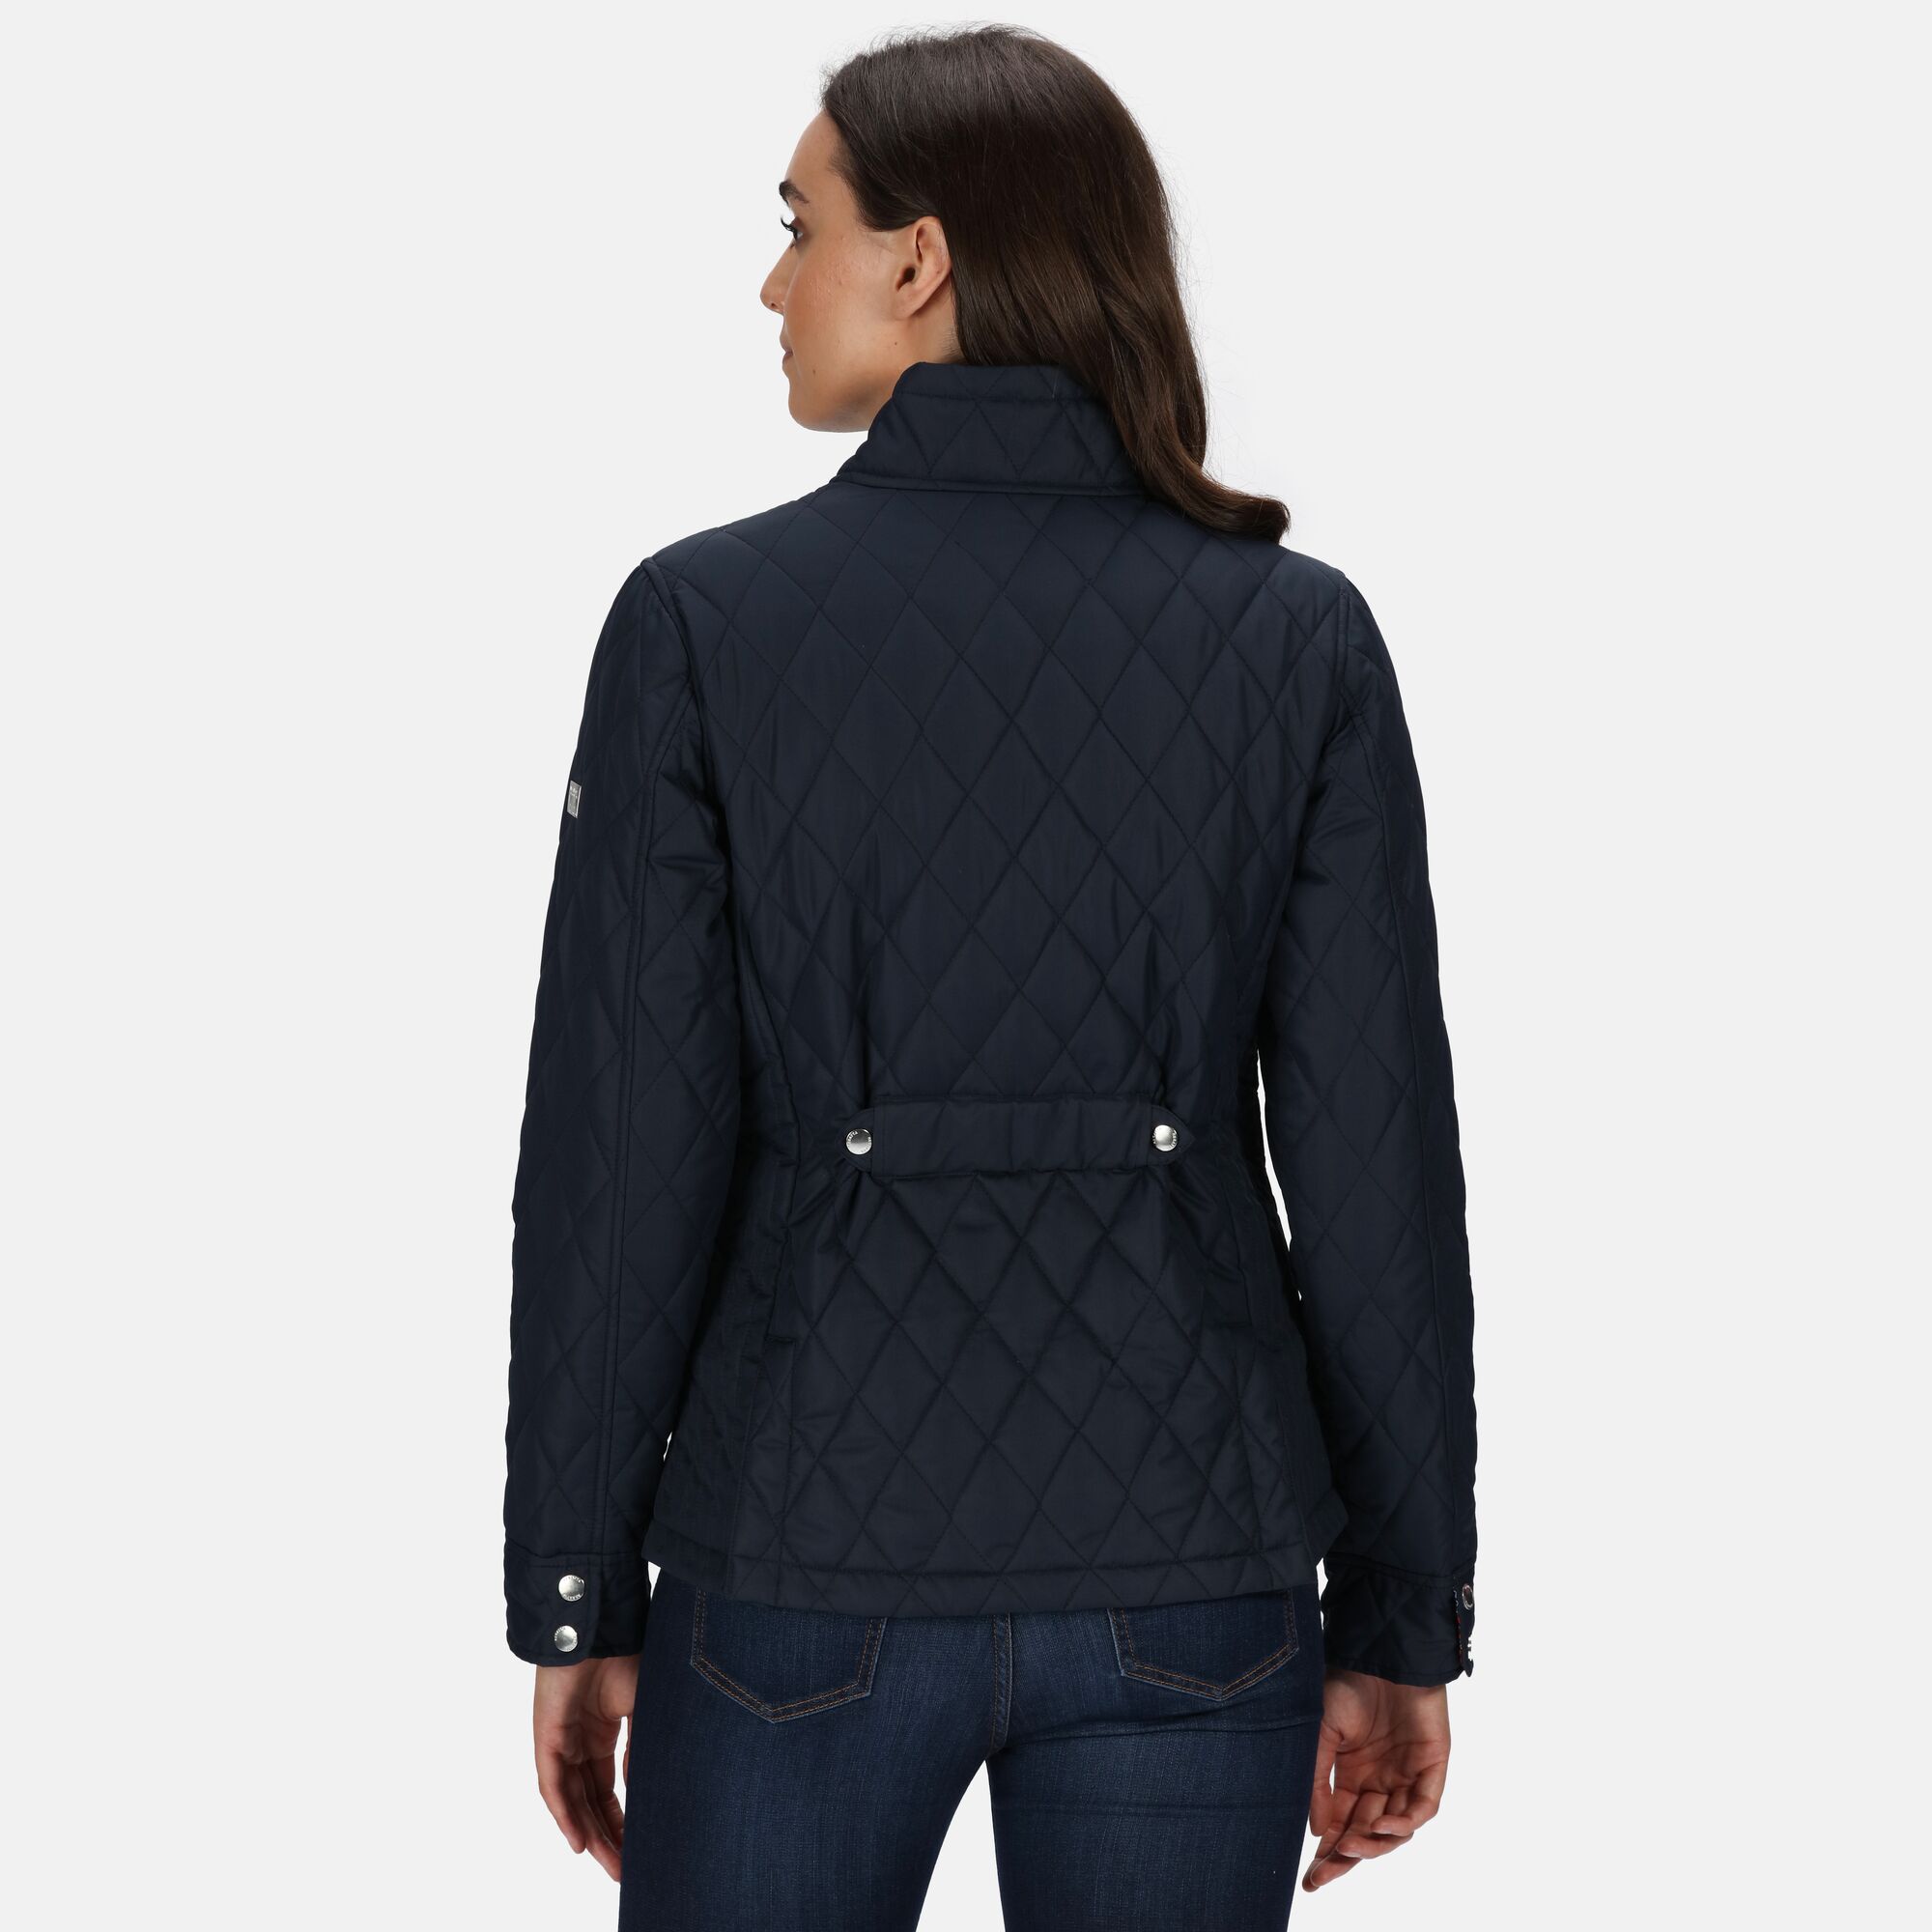 Regatta Charna Womens Quilted Jacket | eBay